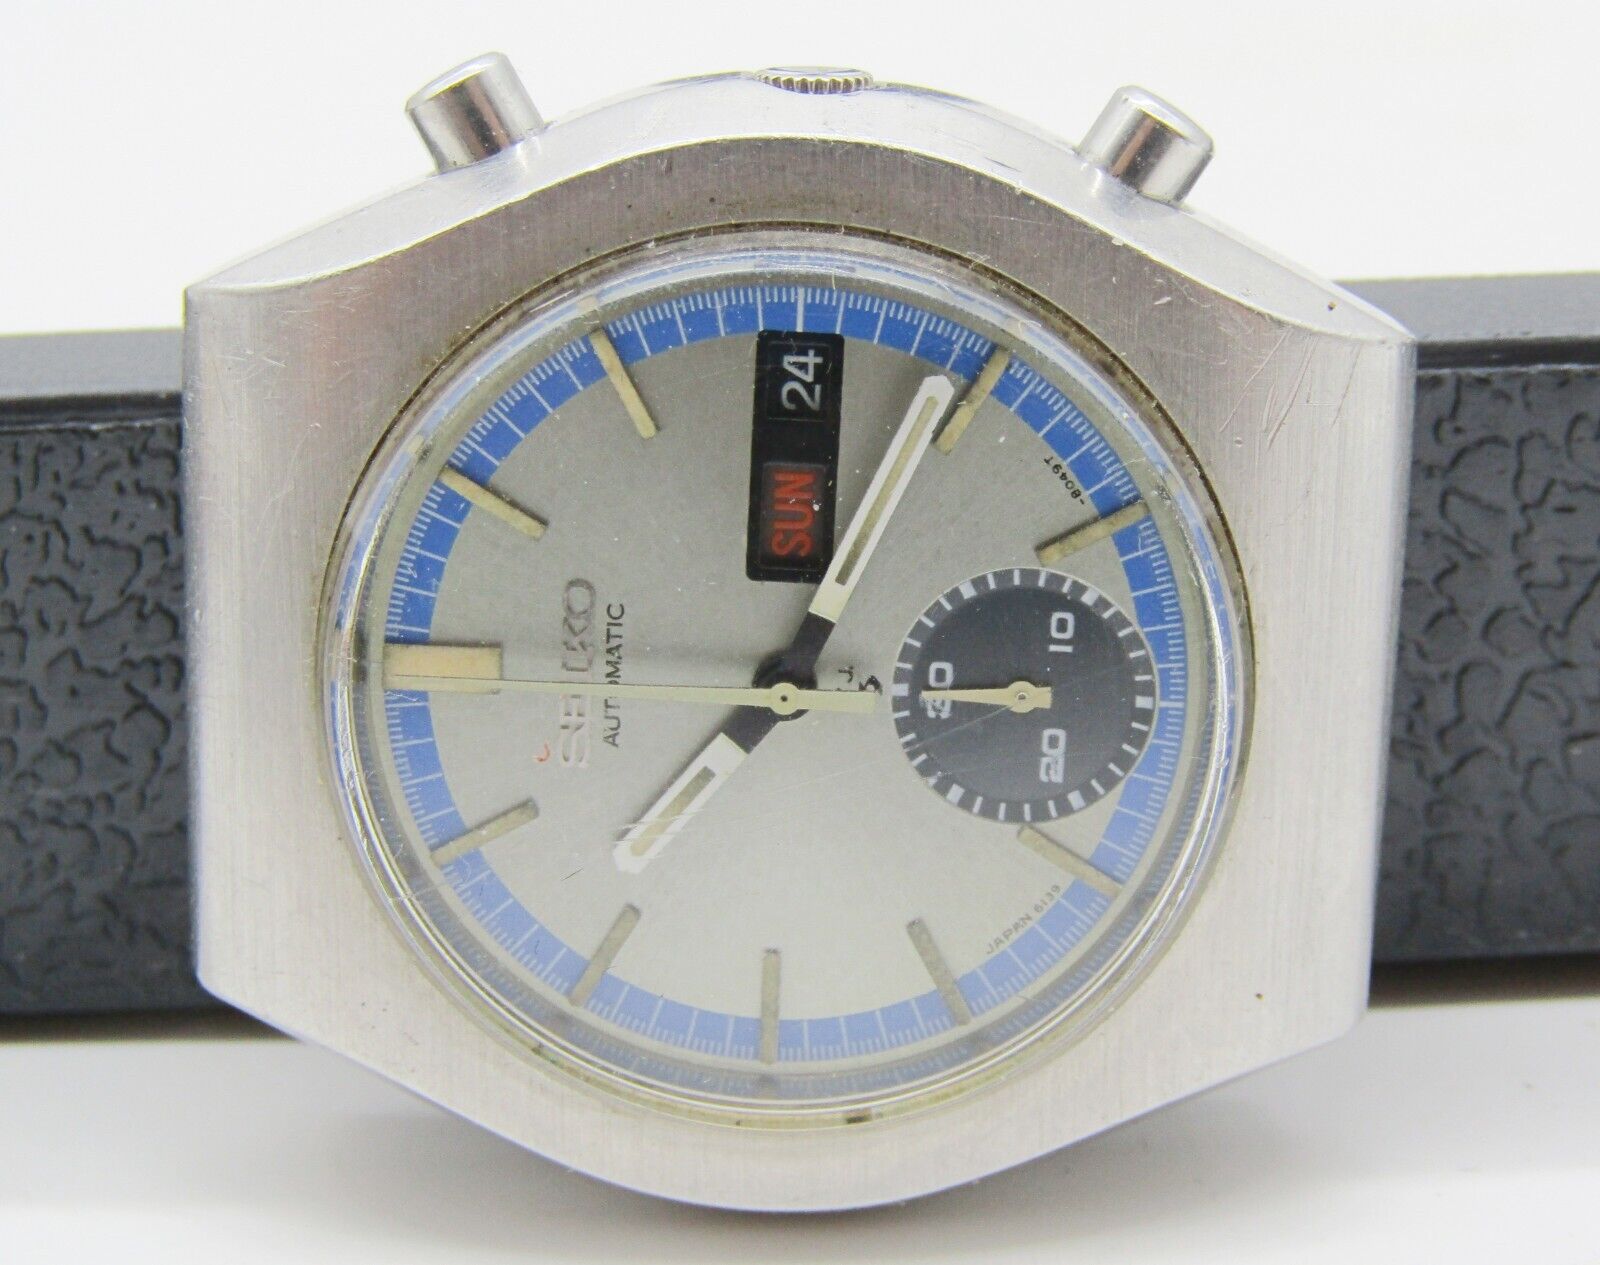 Seiko Chronograph (6139-8029) Market Price | WatchCharts